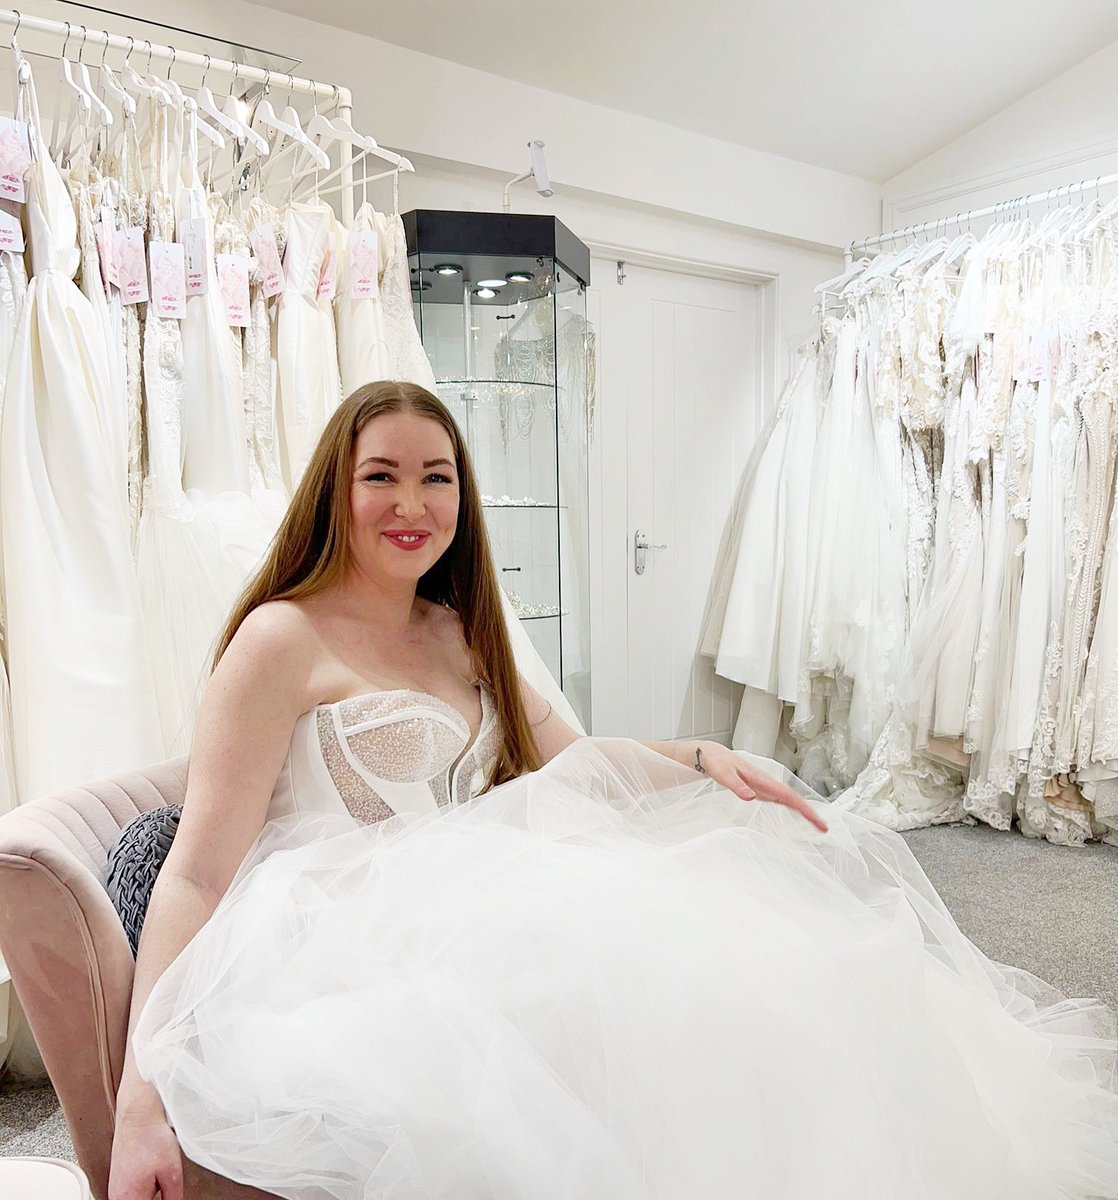 You’ve got to try a least one princess dress right? #weddingdress #weddingdressshopping